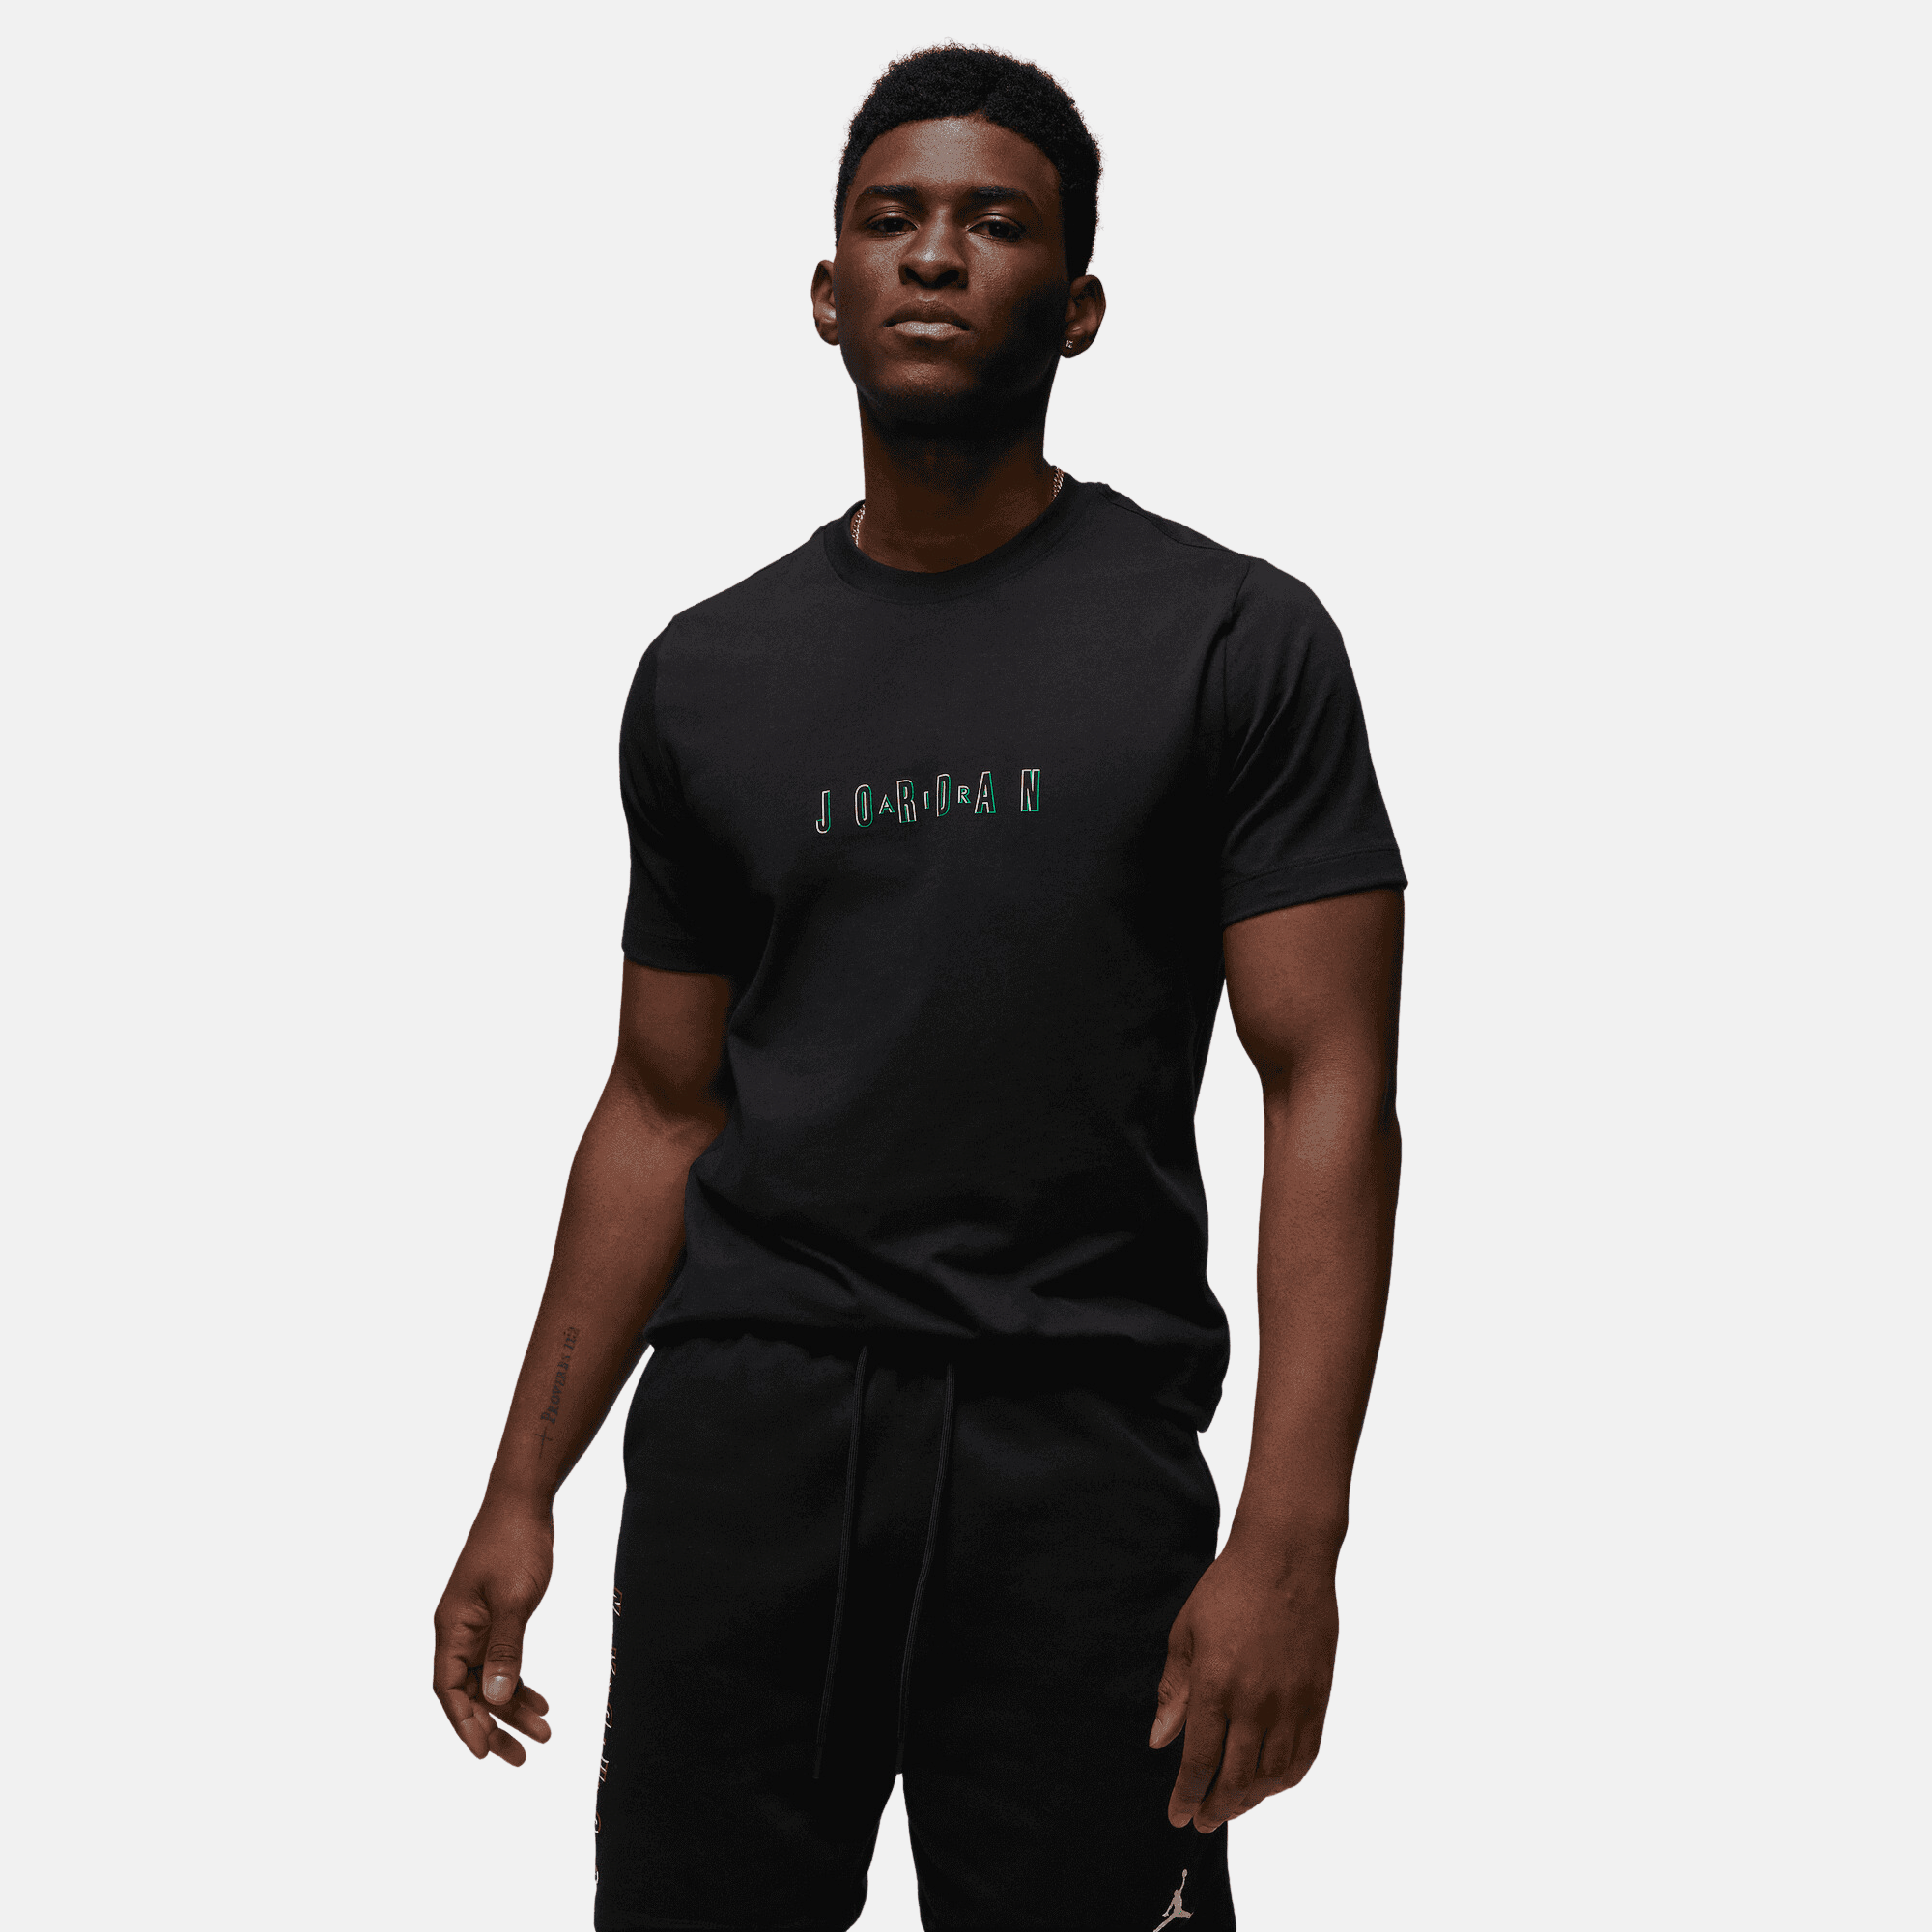 Air Jordan Essentials Black Graphic T-Shirt